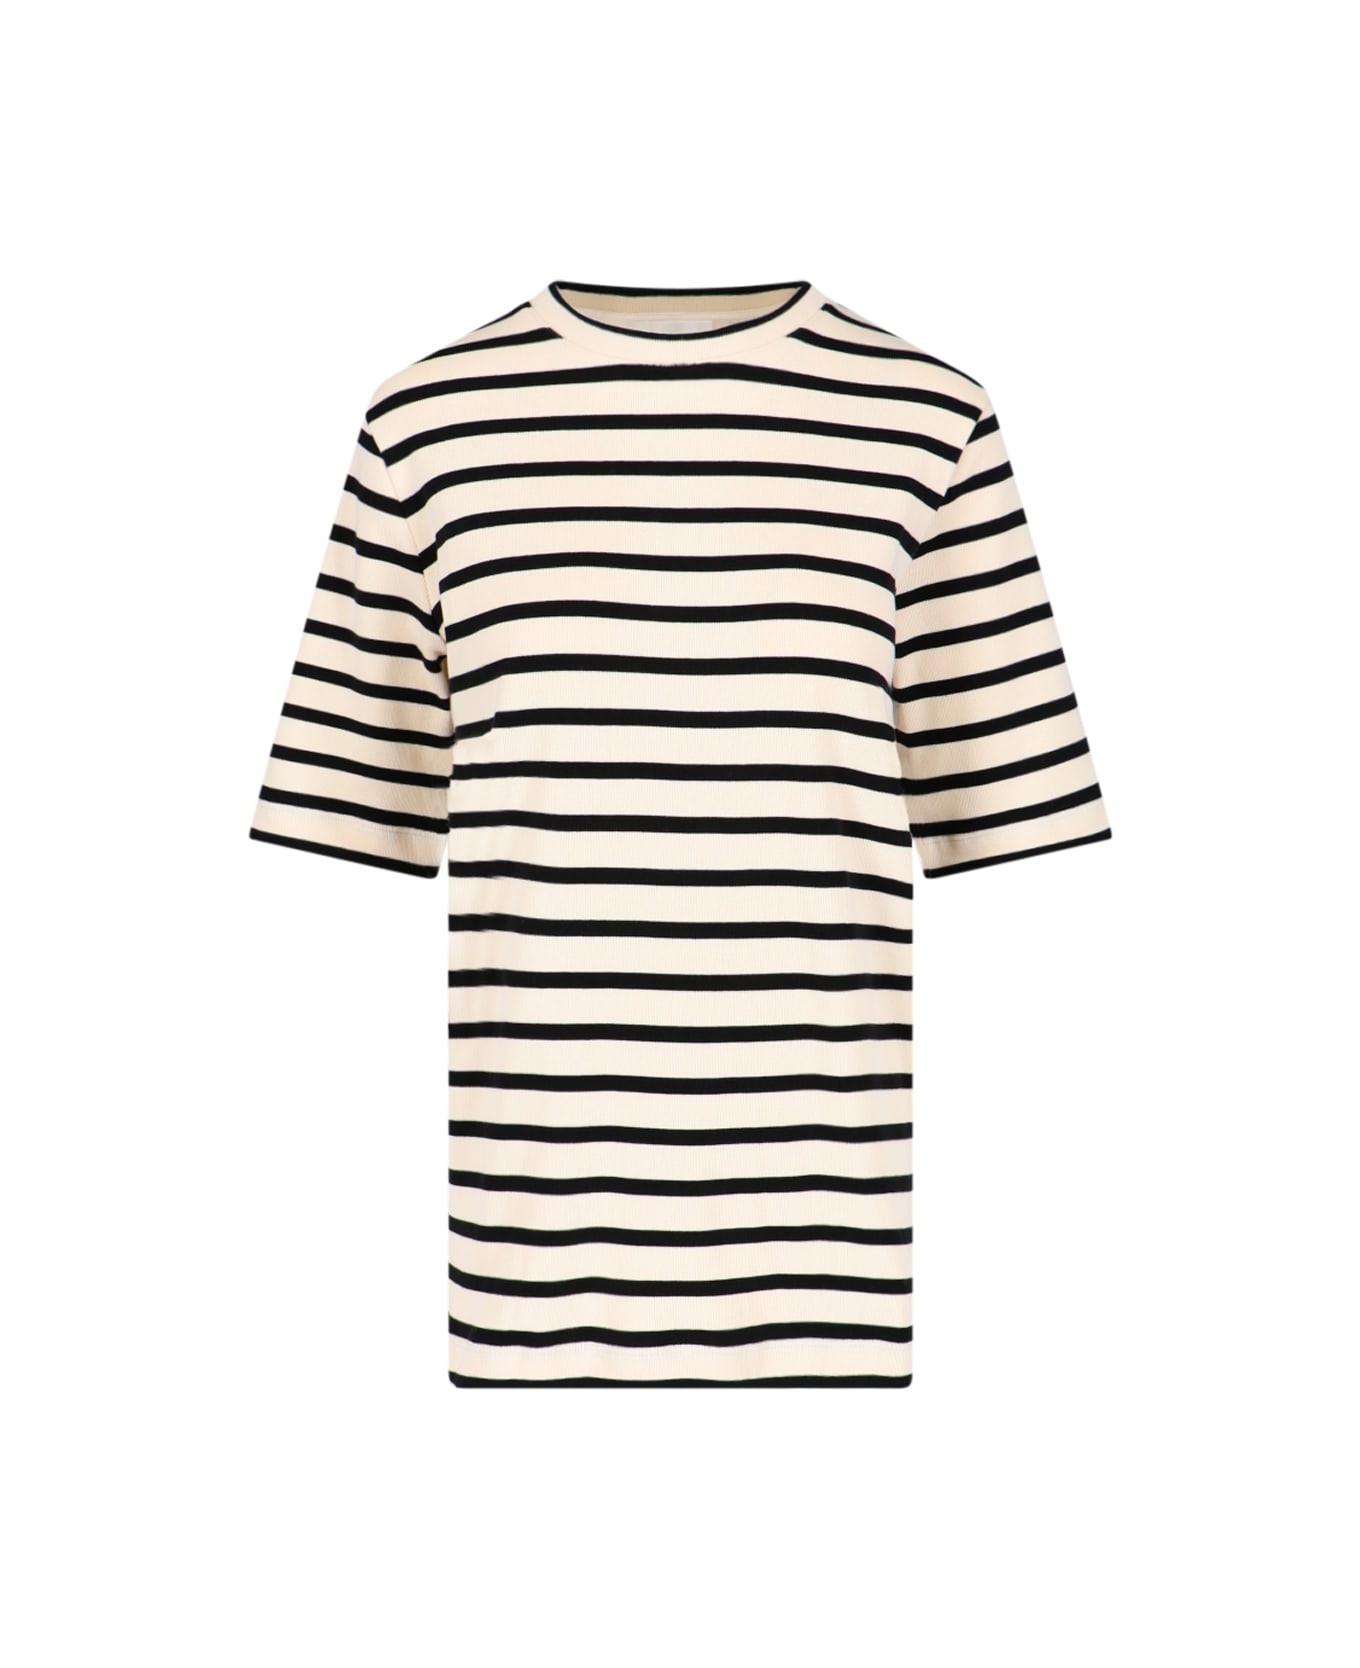 Jil Sander Striped T-shirt - Beige